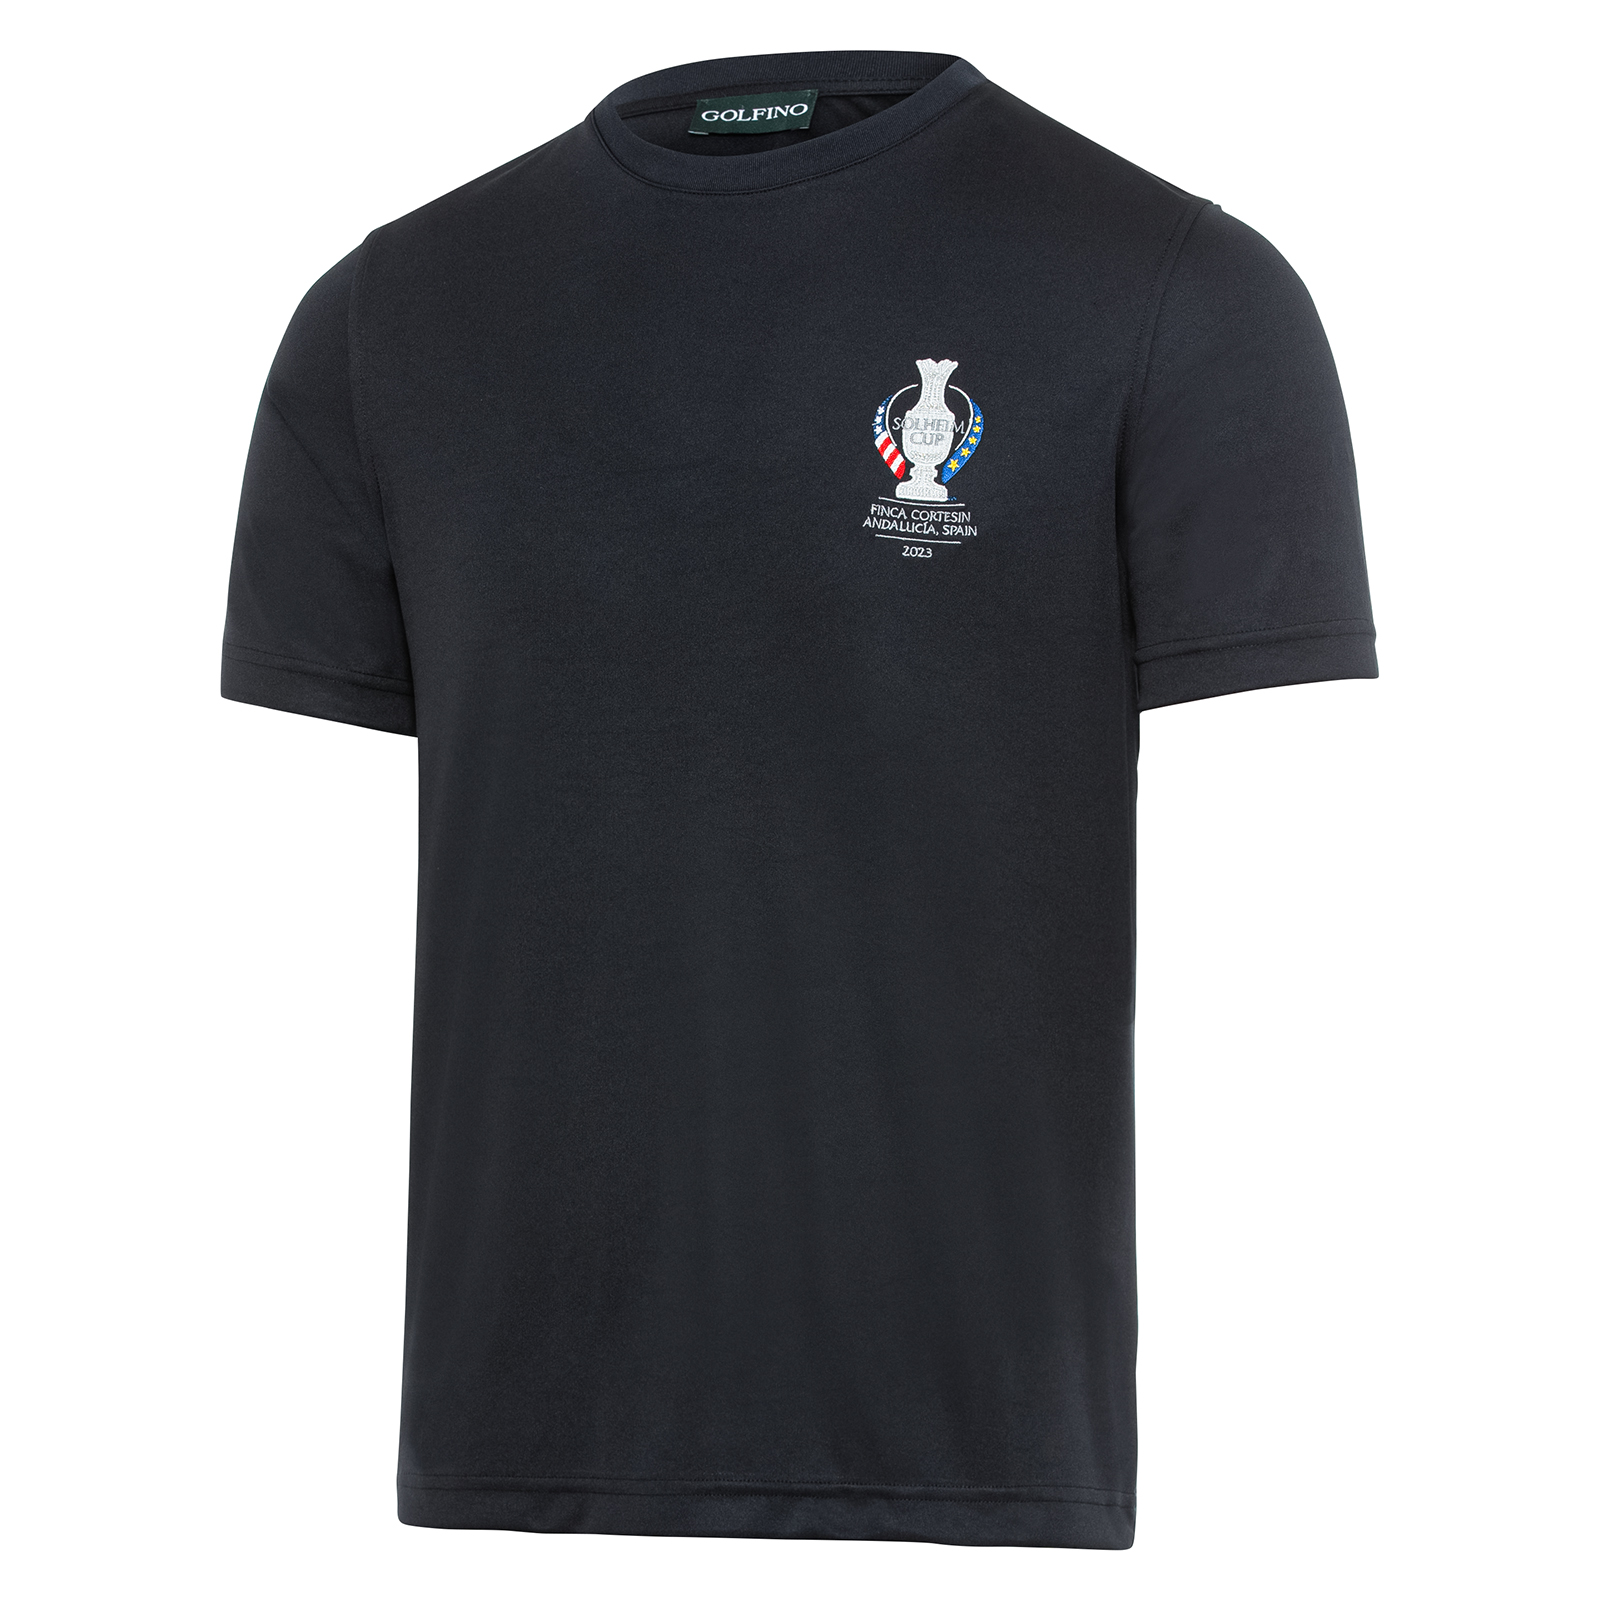 Zacht golf-T-shirt met uv-bescherming in Solheim Cup-design